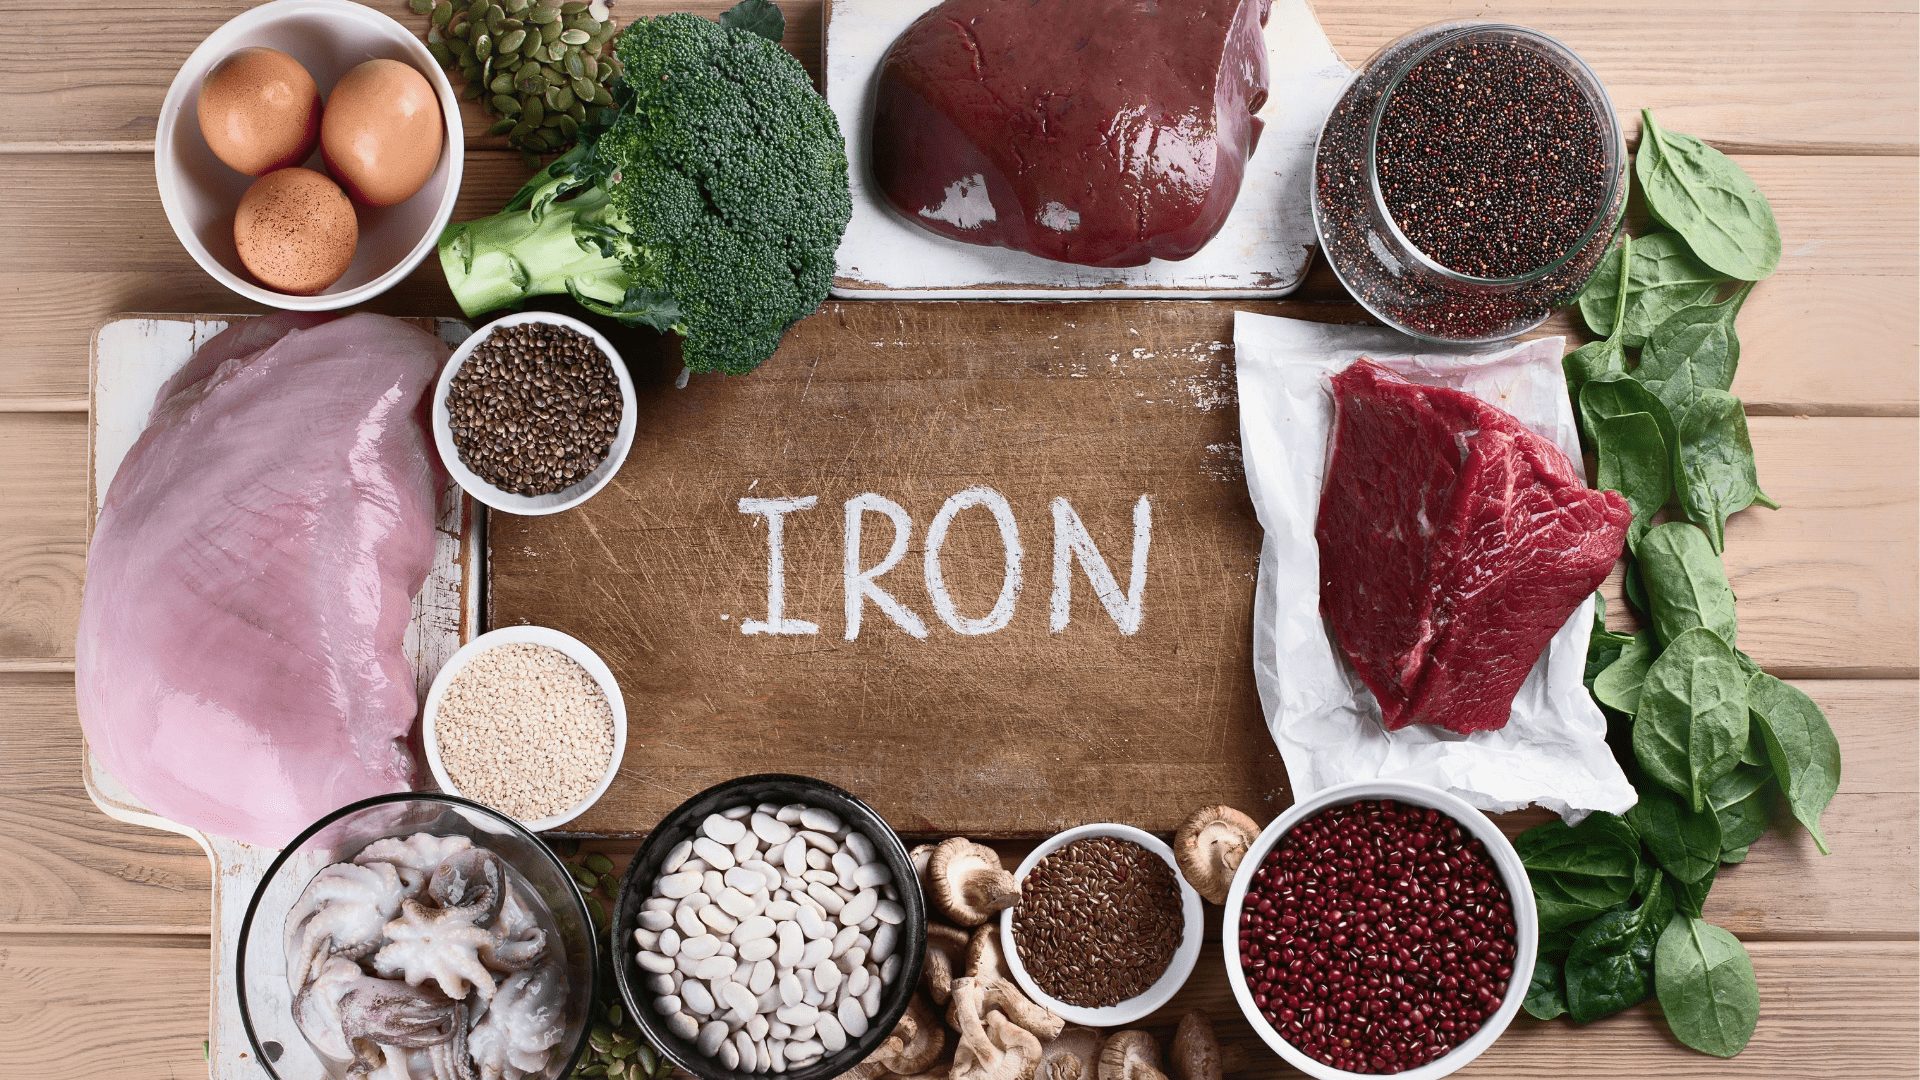 Benefits of Iron